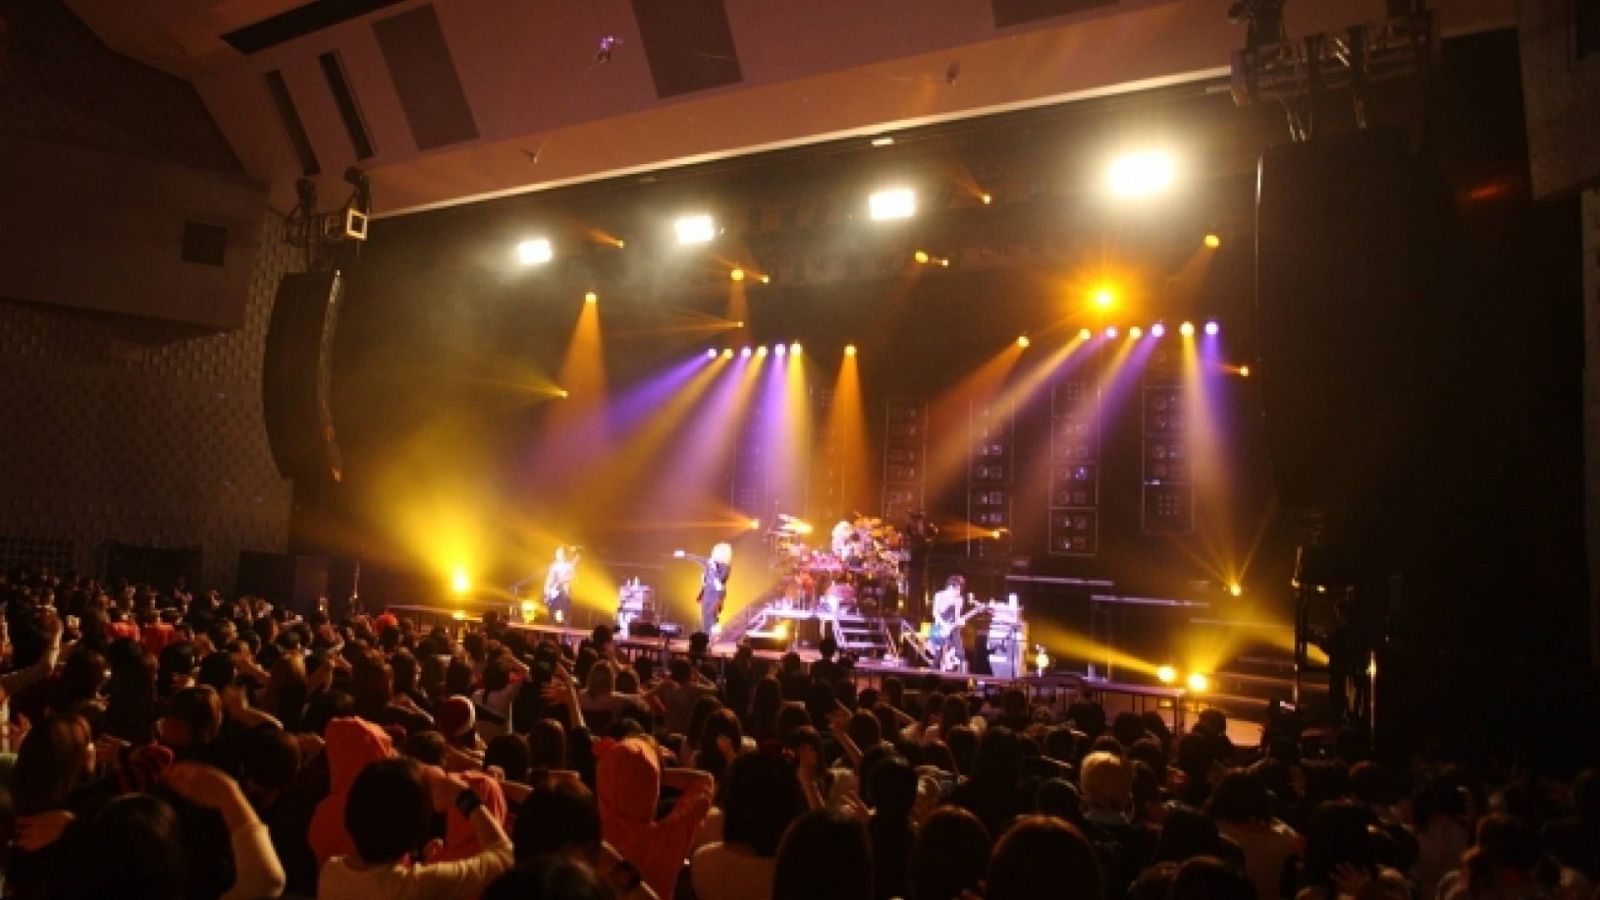 Kra TOUR 2010 FINAL - Heart to Heart ~Kanjou no rinkaku~ © PS COMPANY